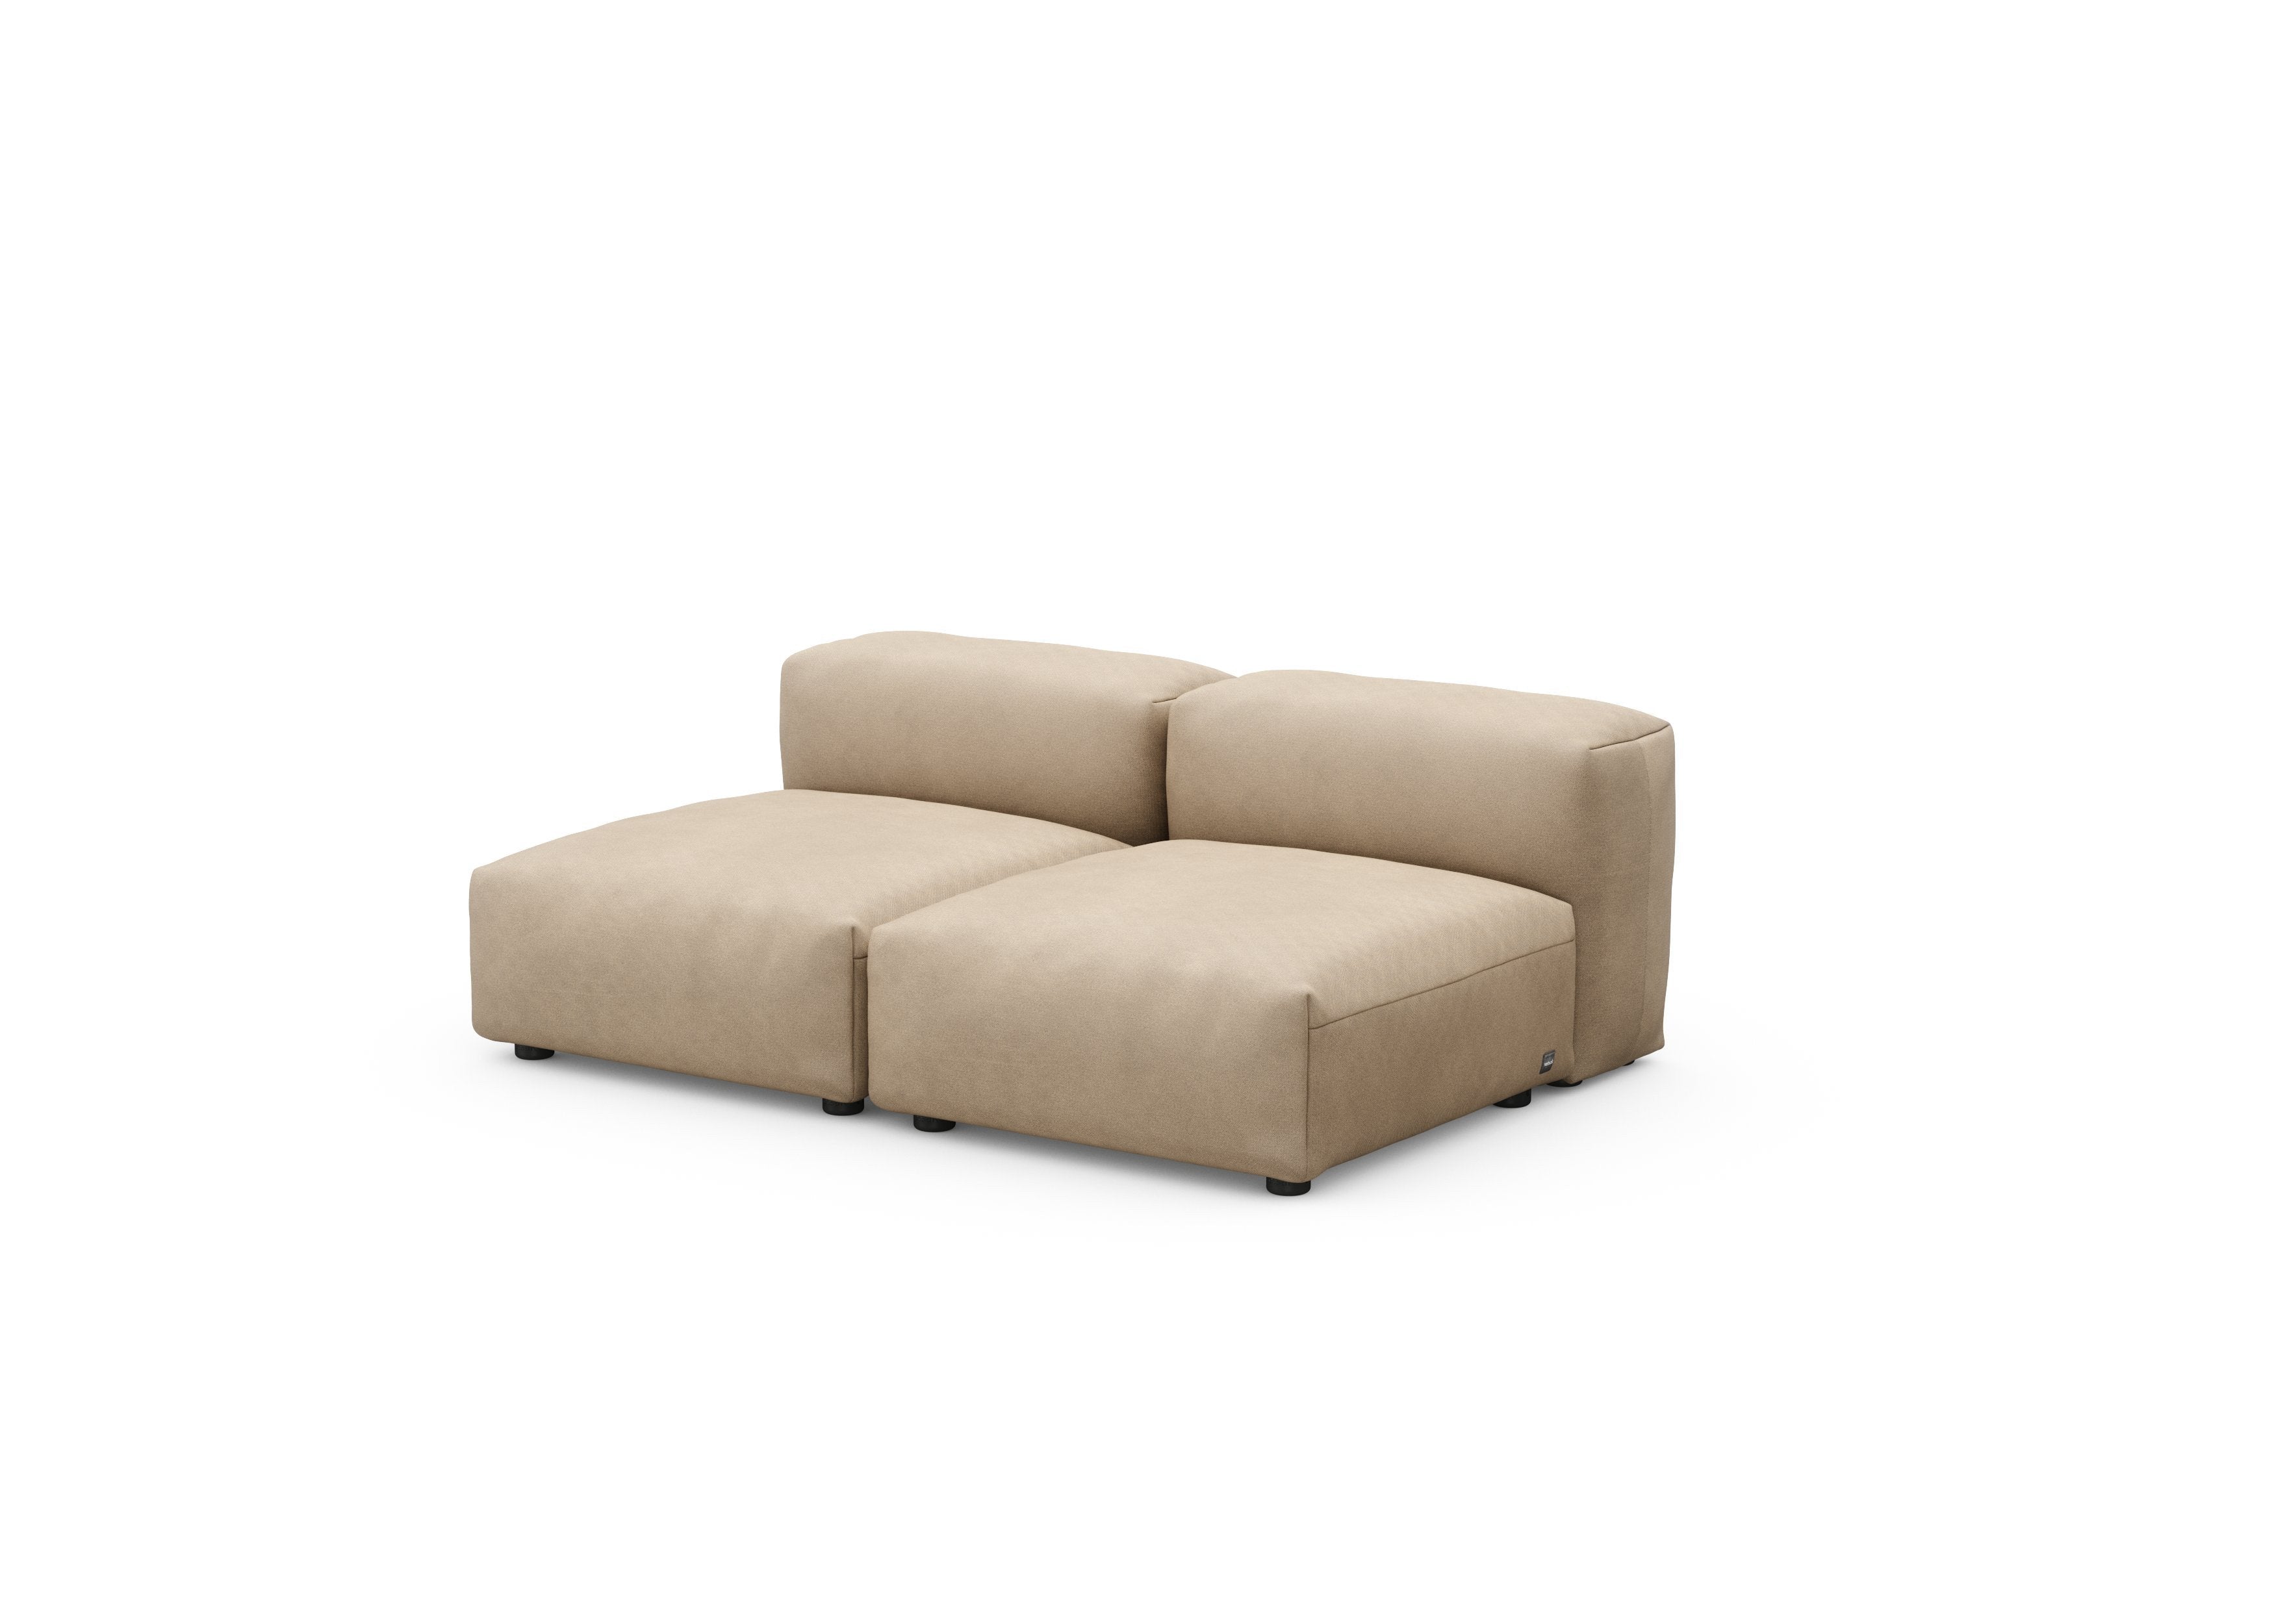 vetsak®-Two Seat Lounge Sofa S Canvas stone